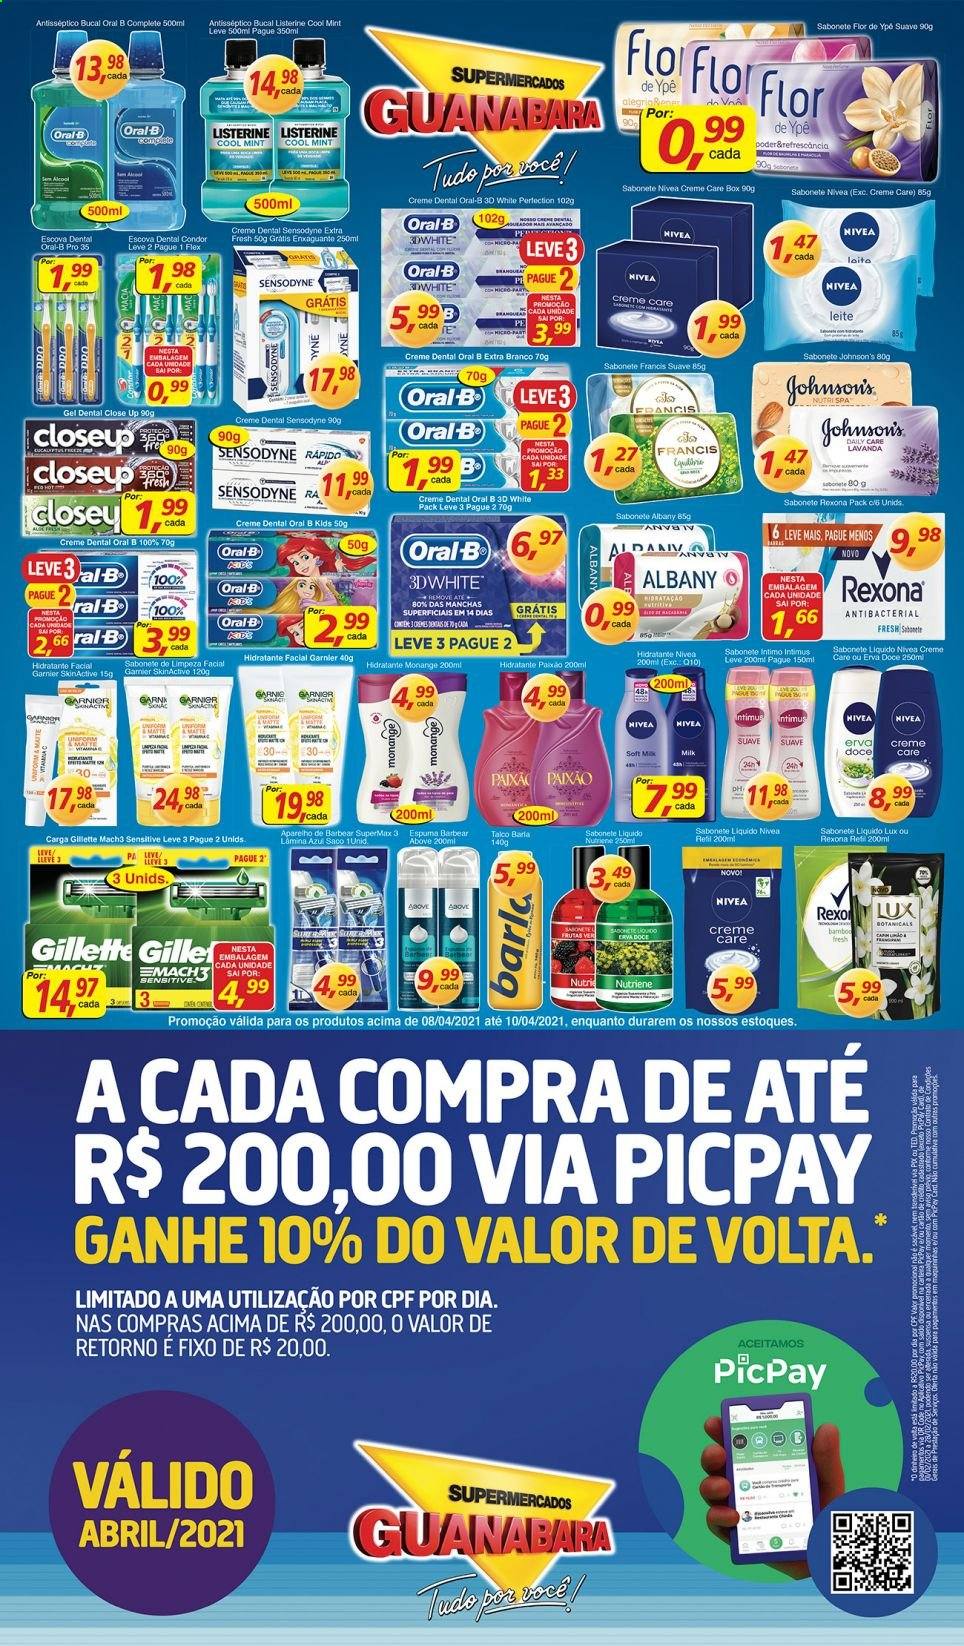 Encarte Supermercados Guanabara  - 08.04.2021 - 10.04.2021.